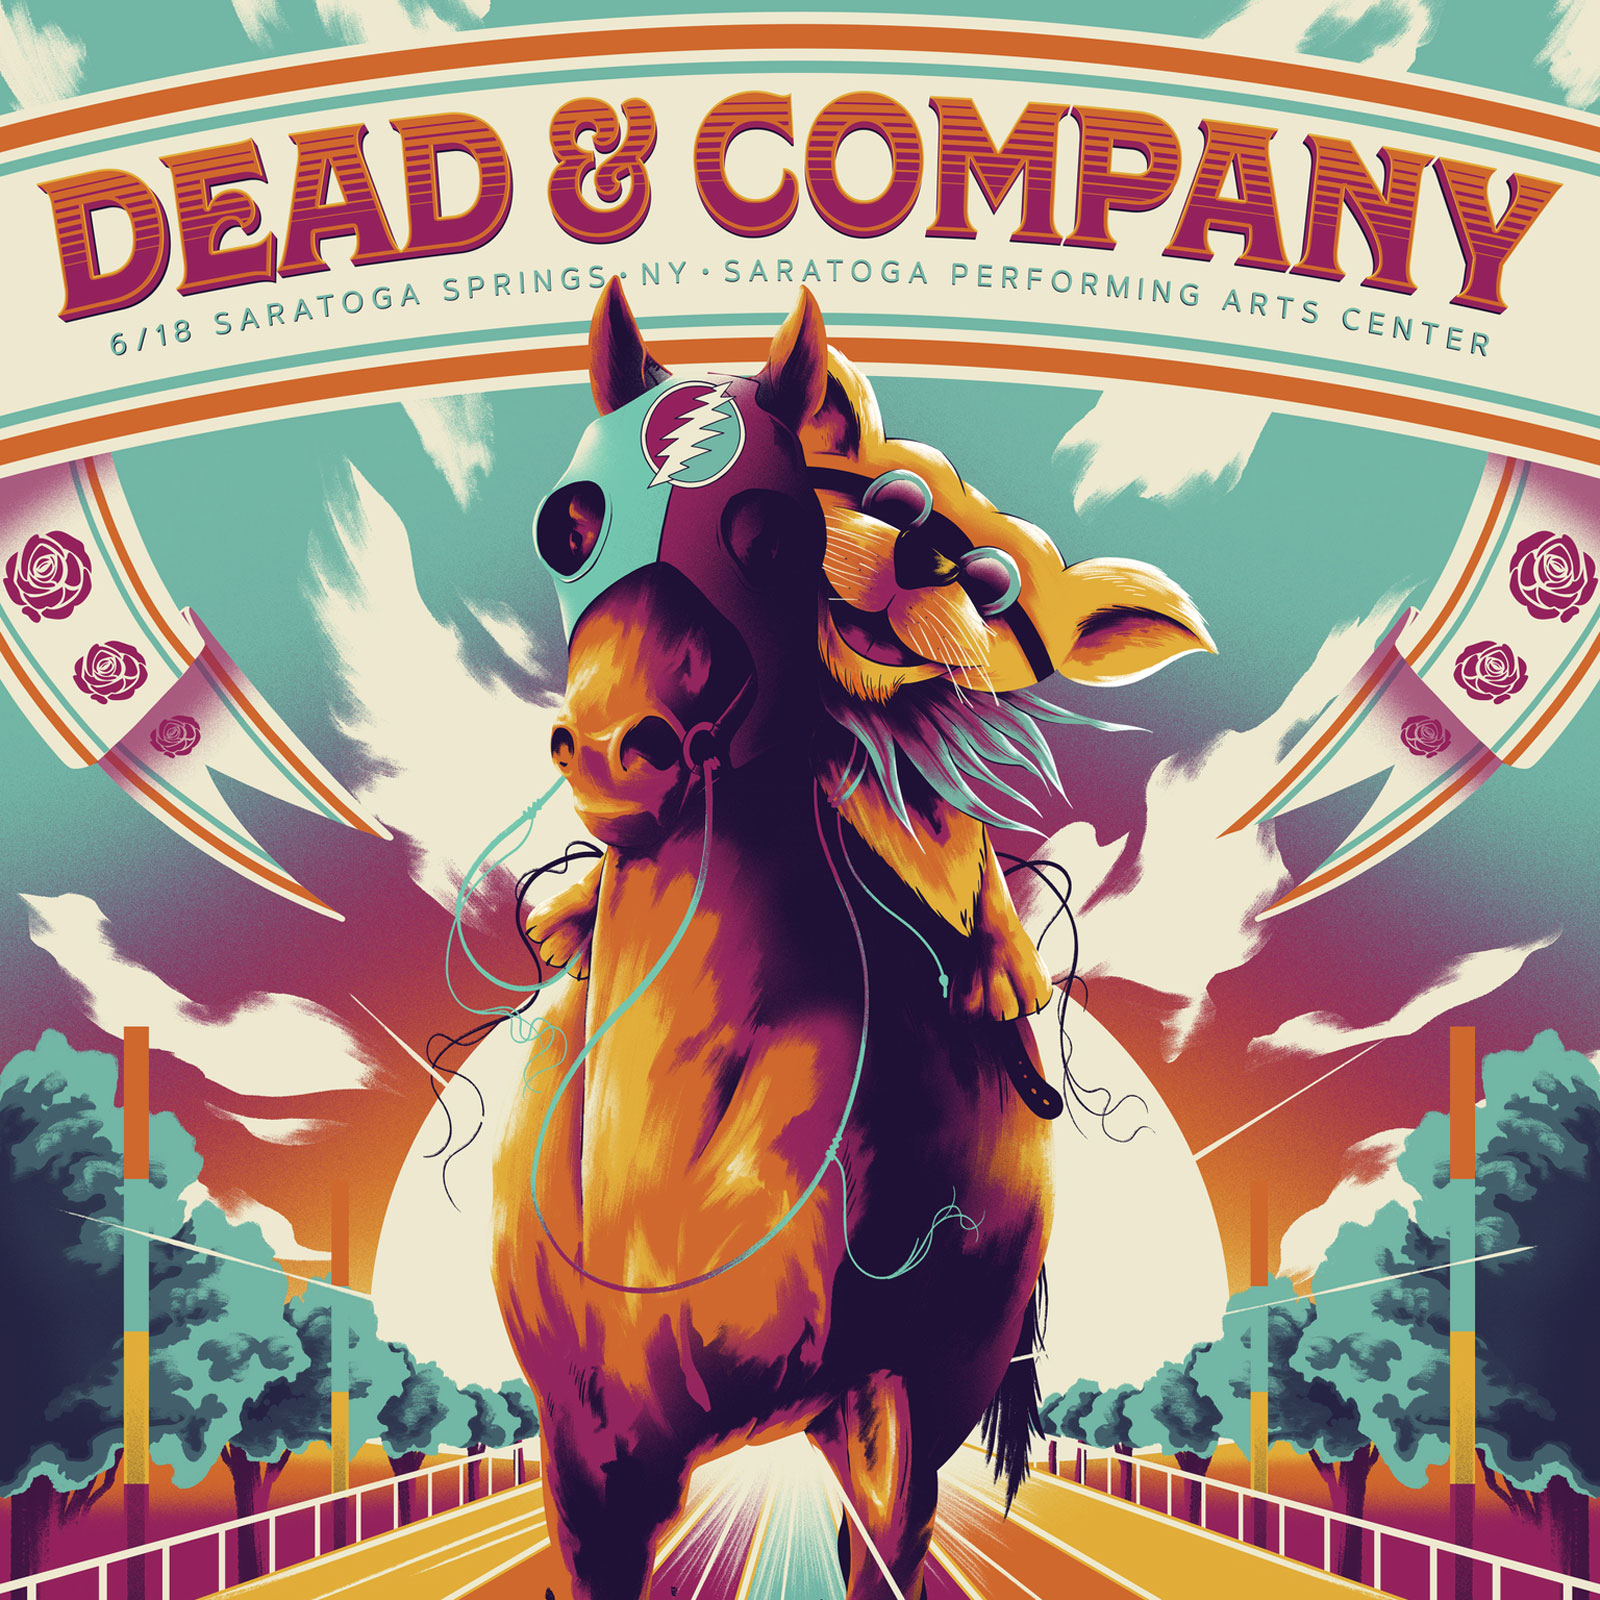 Dead company. Постеры из фотошопа. 01 - Death's Company (1).mp3.